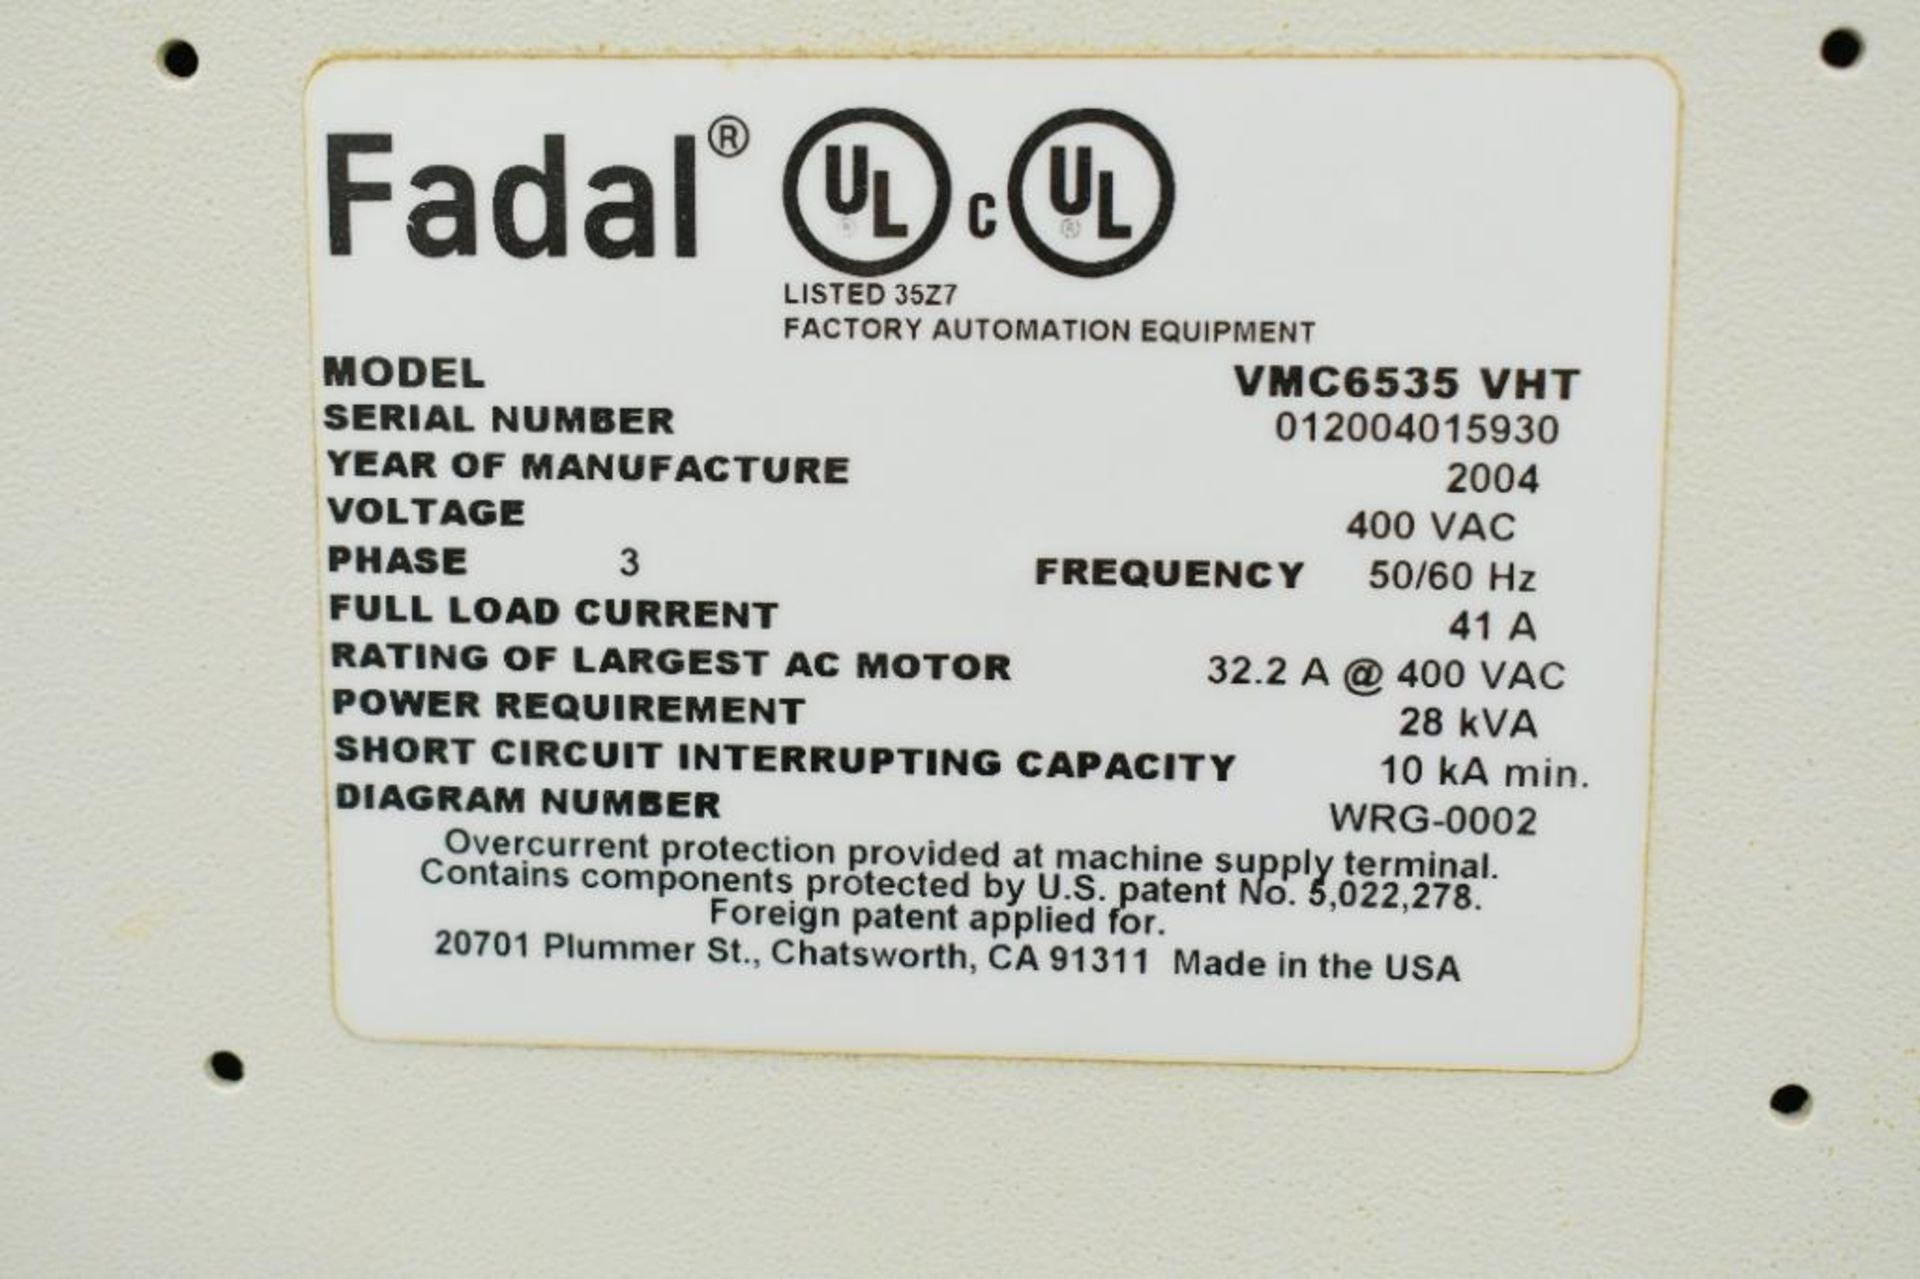 2004 Fadal VMC 6535 VHT, CNC Vertical Machining Center - Image 11 of 14